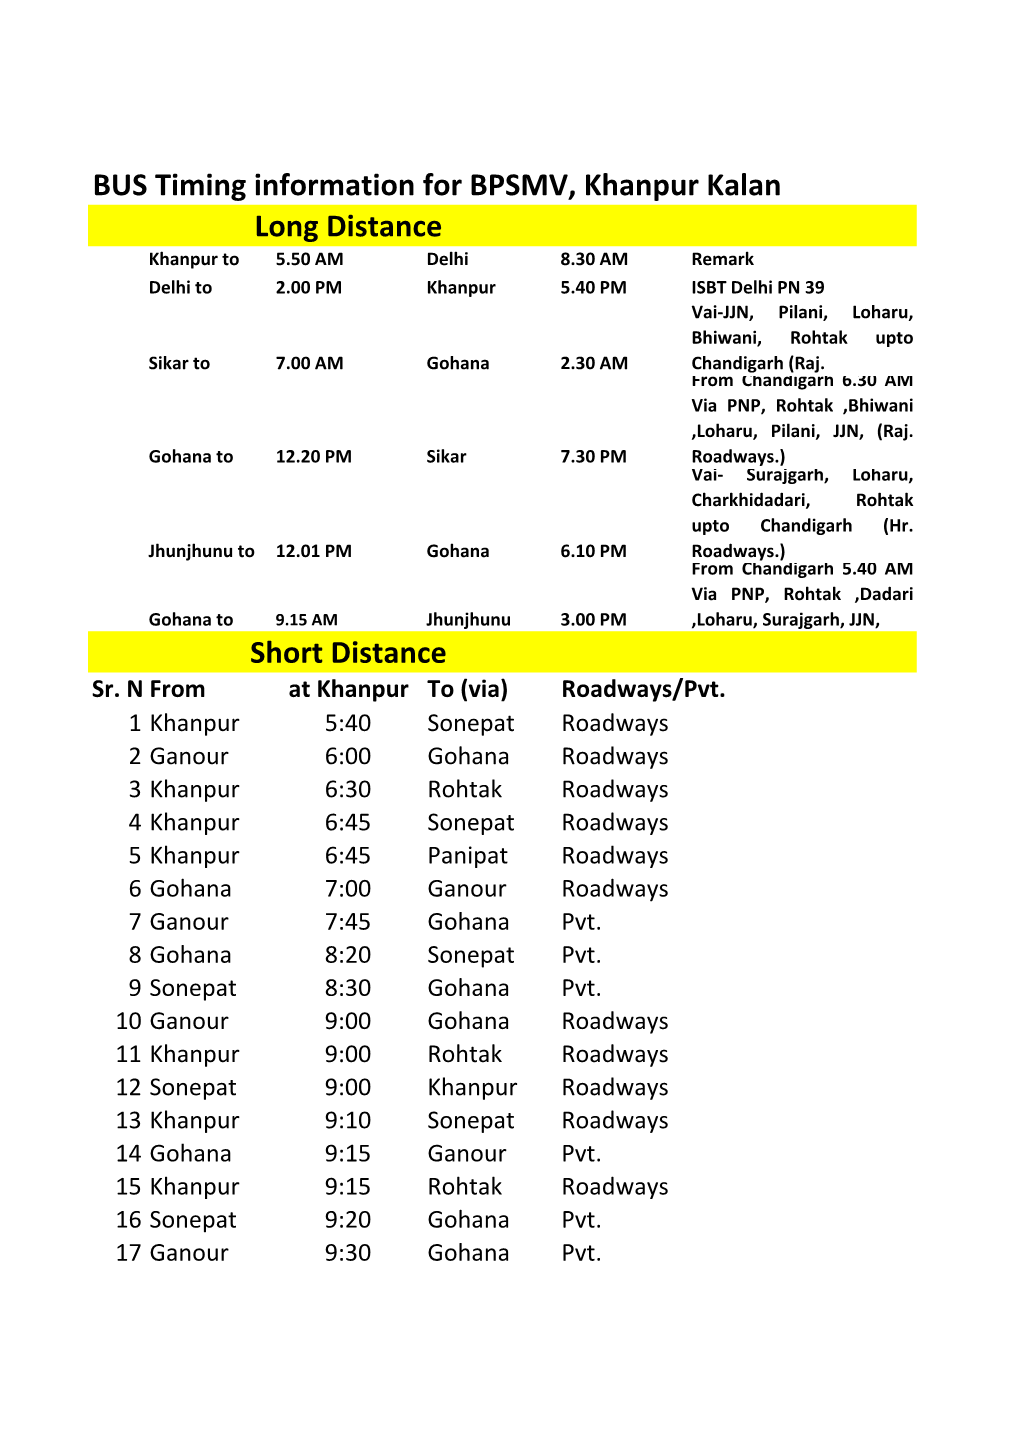 BUS Timing Information for BPSMV, Khanpur Kalan Long Distance